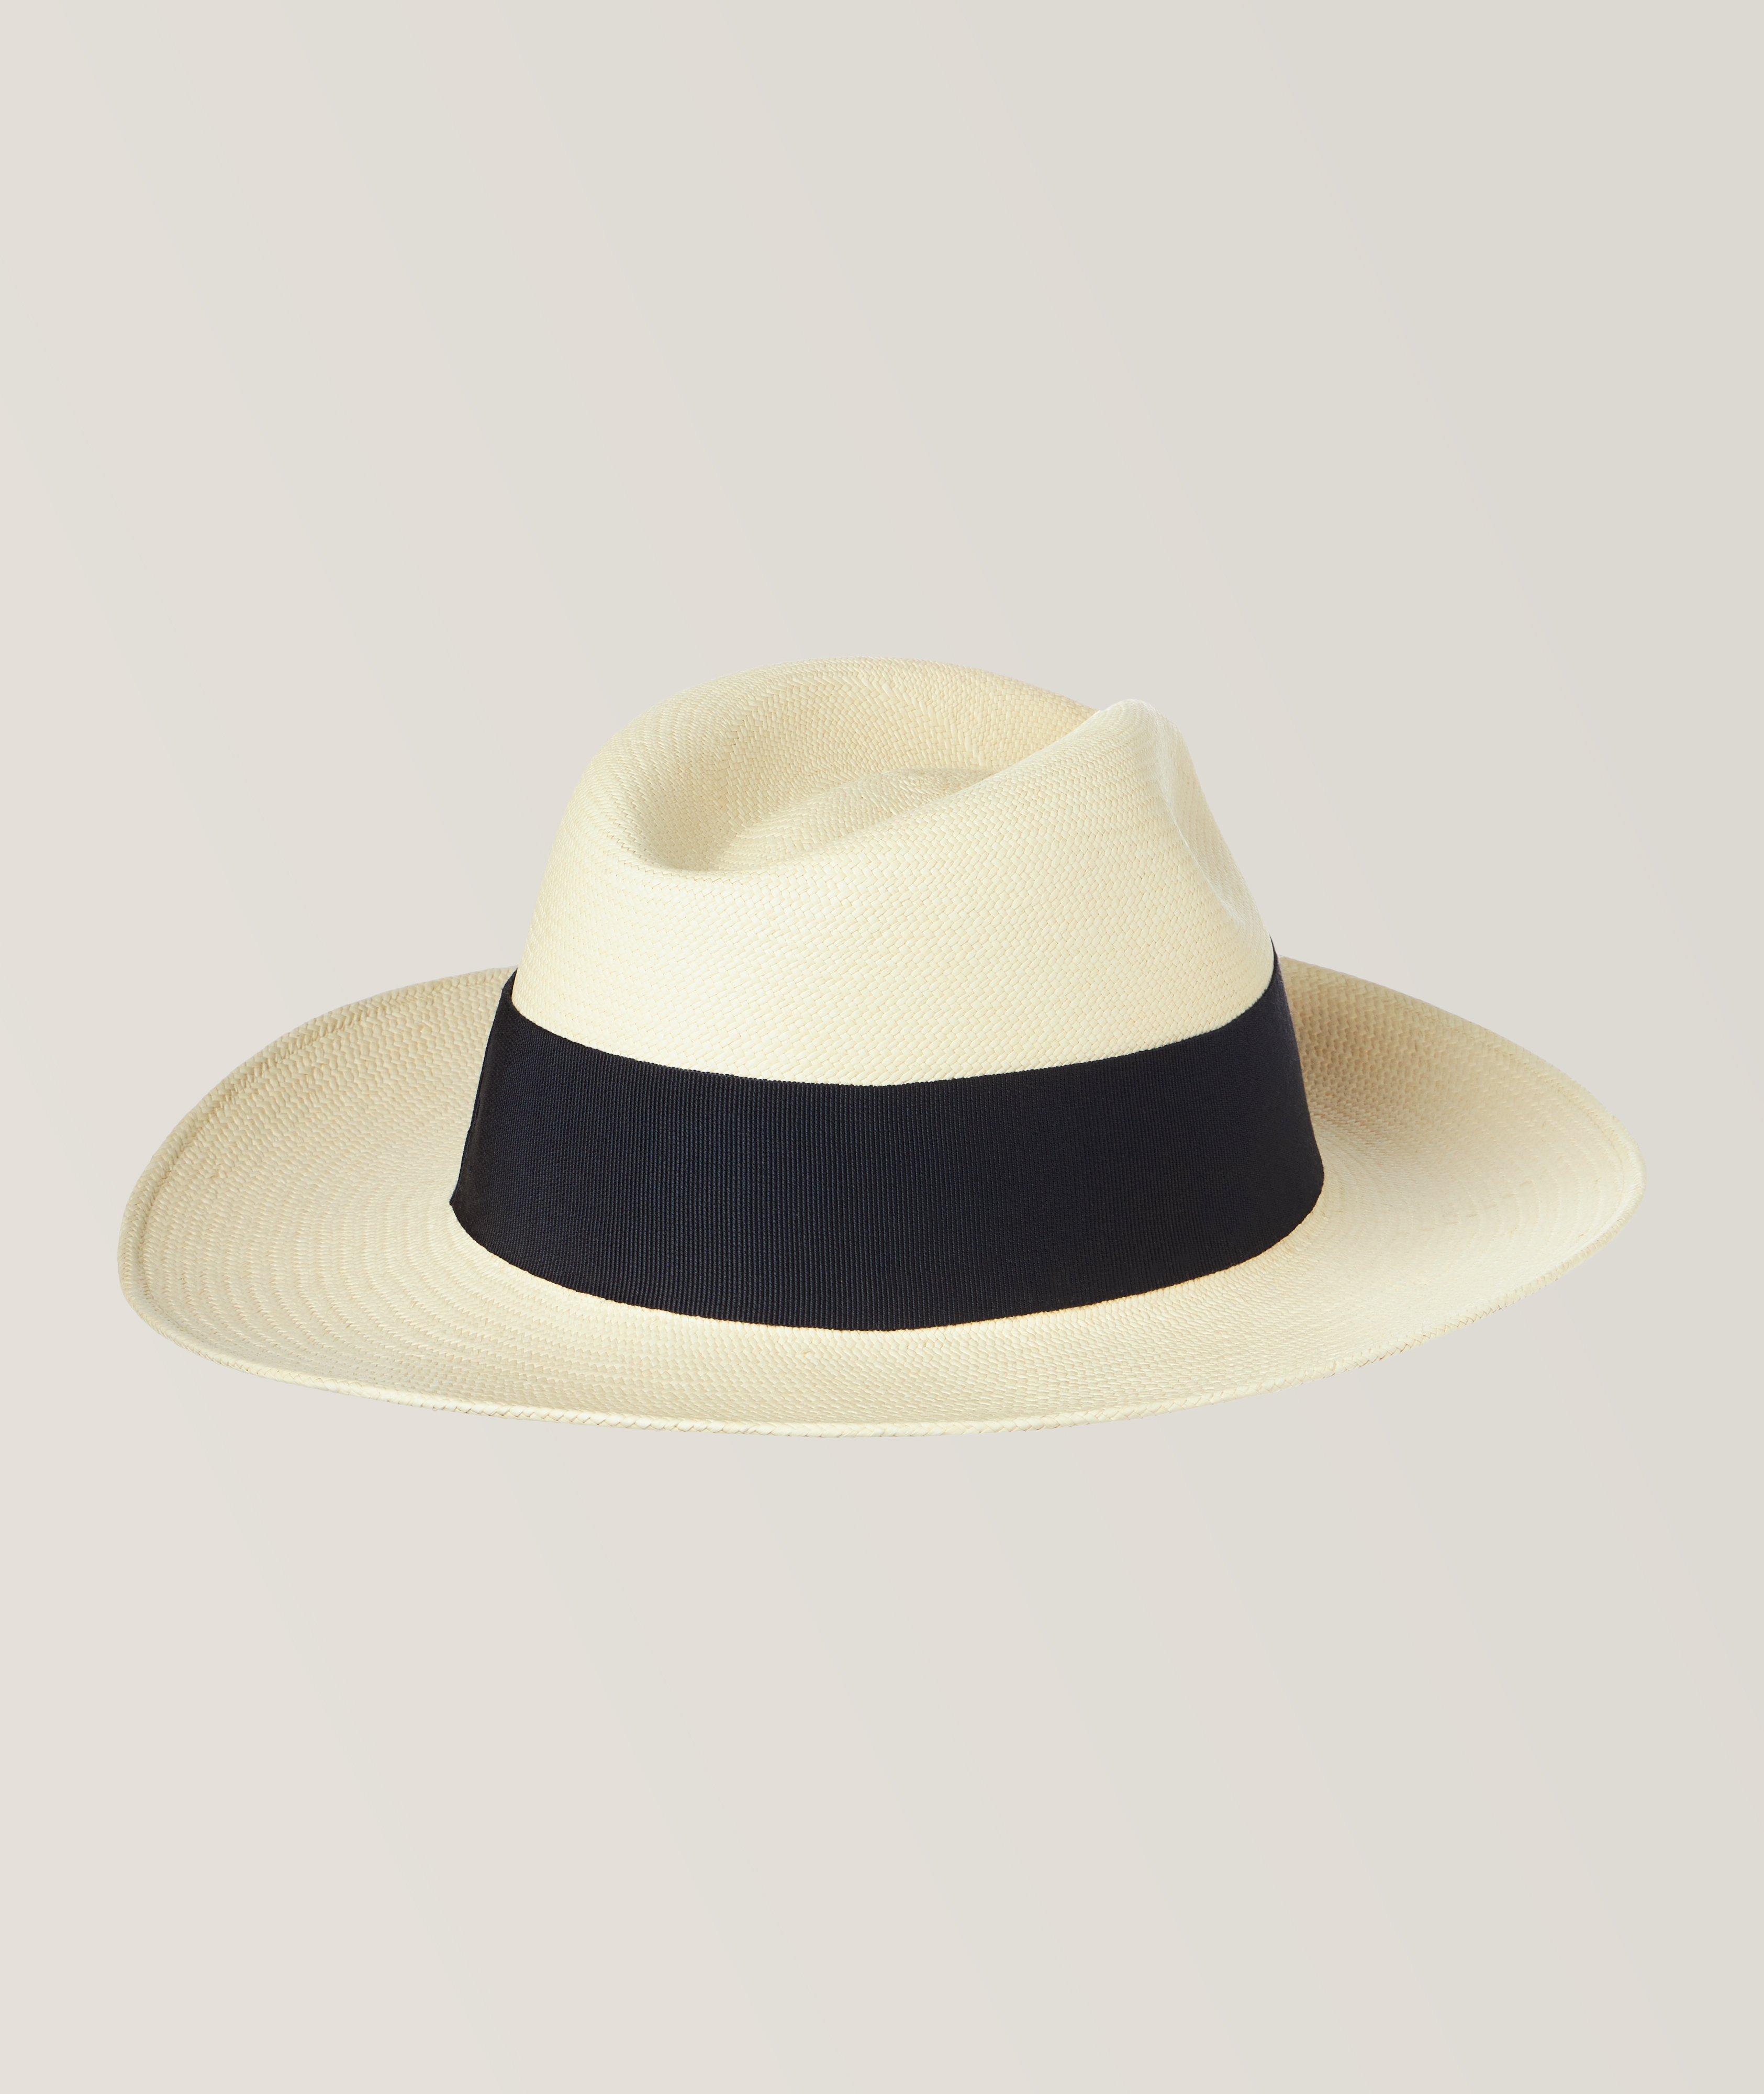 Generic Men Hat Sun Protection Wide Brim Panama Beige @ Best Price Online